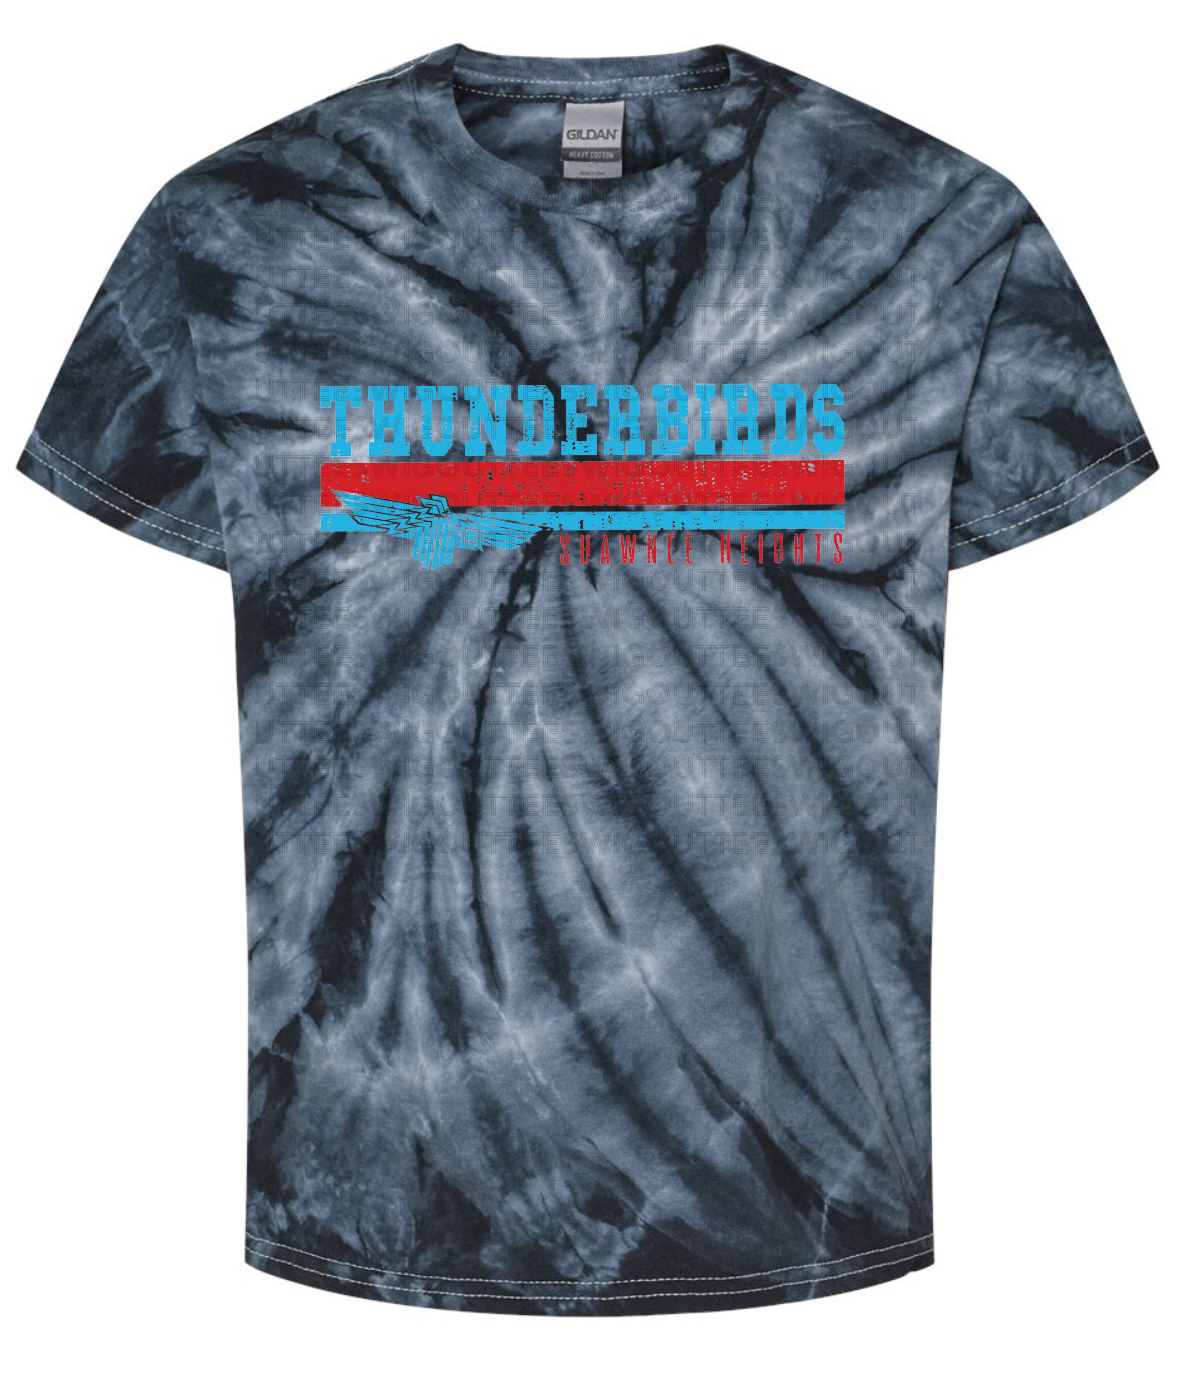 Thunderbirds Tie Dye T-shirt